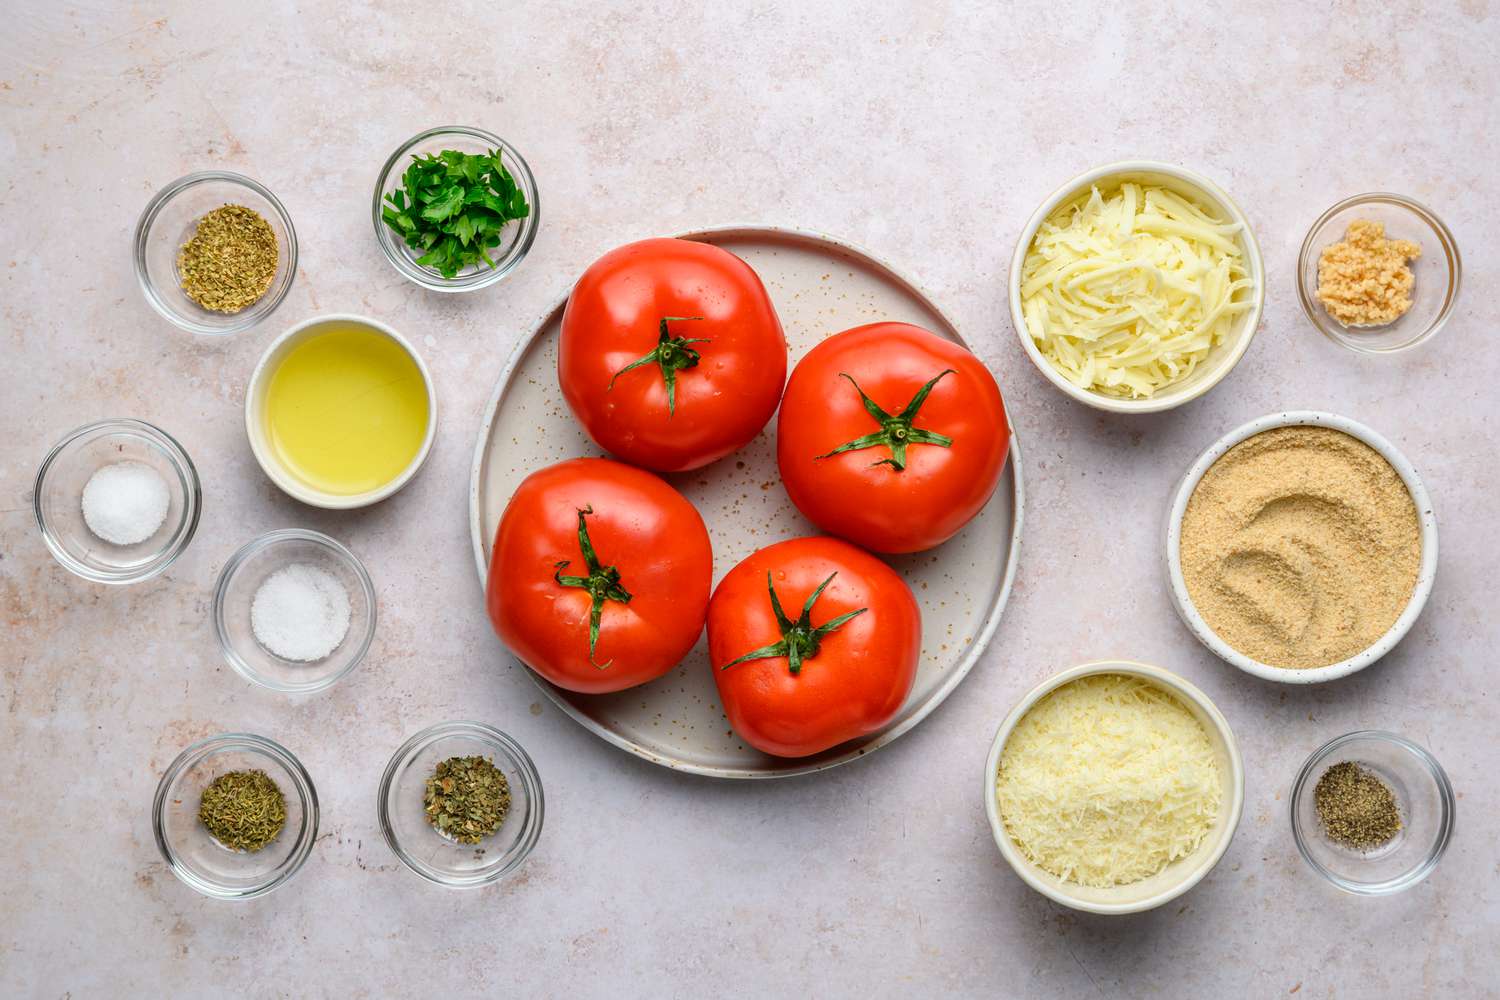 Ingredients to make vegetarian stuffed tomatoes